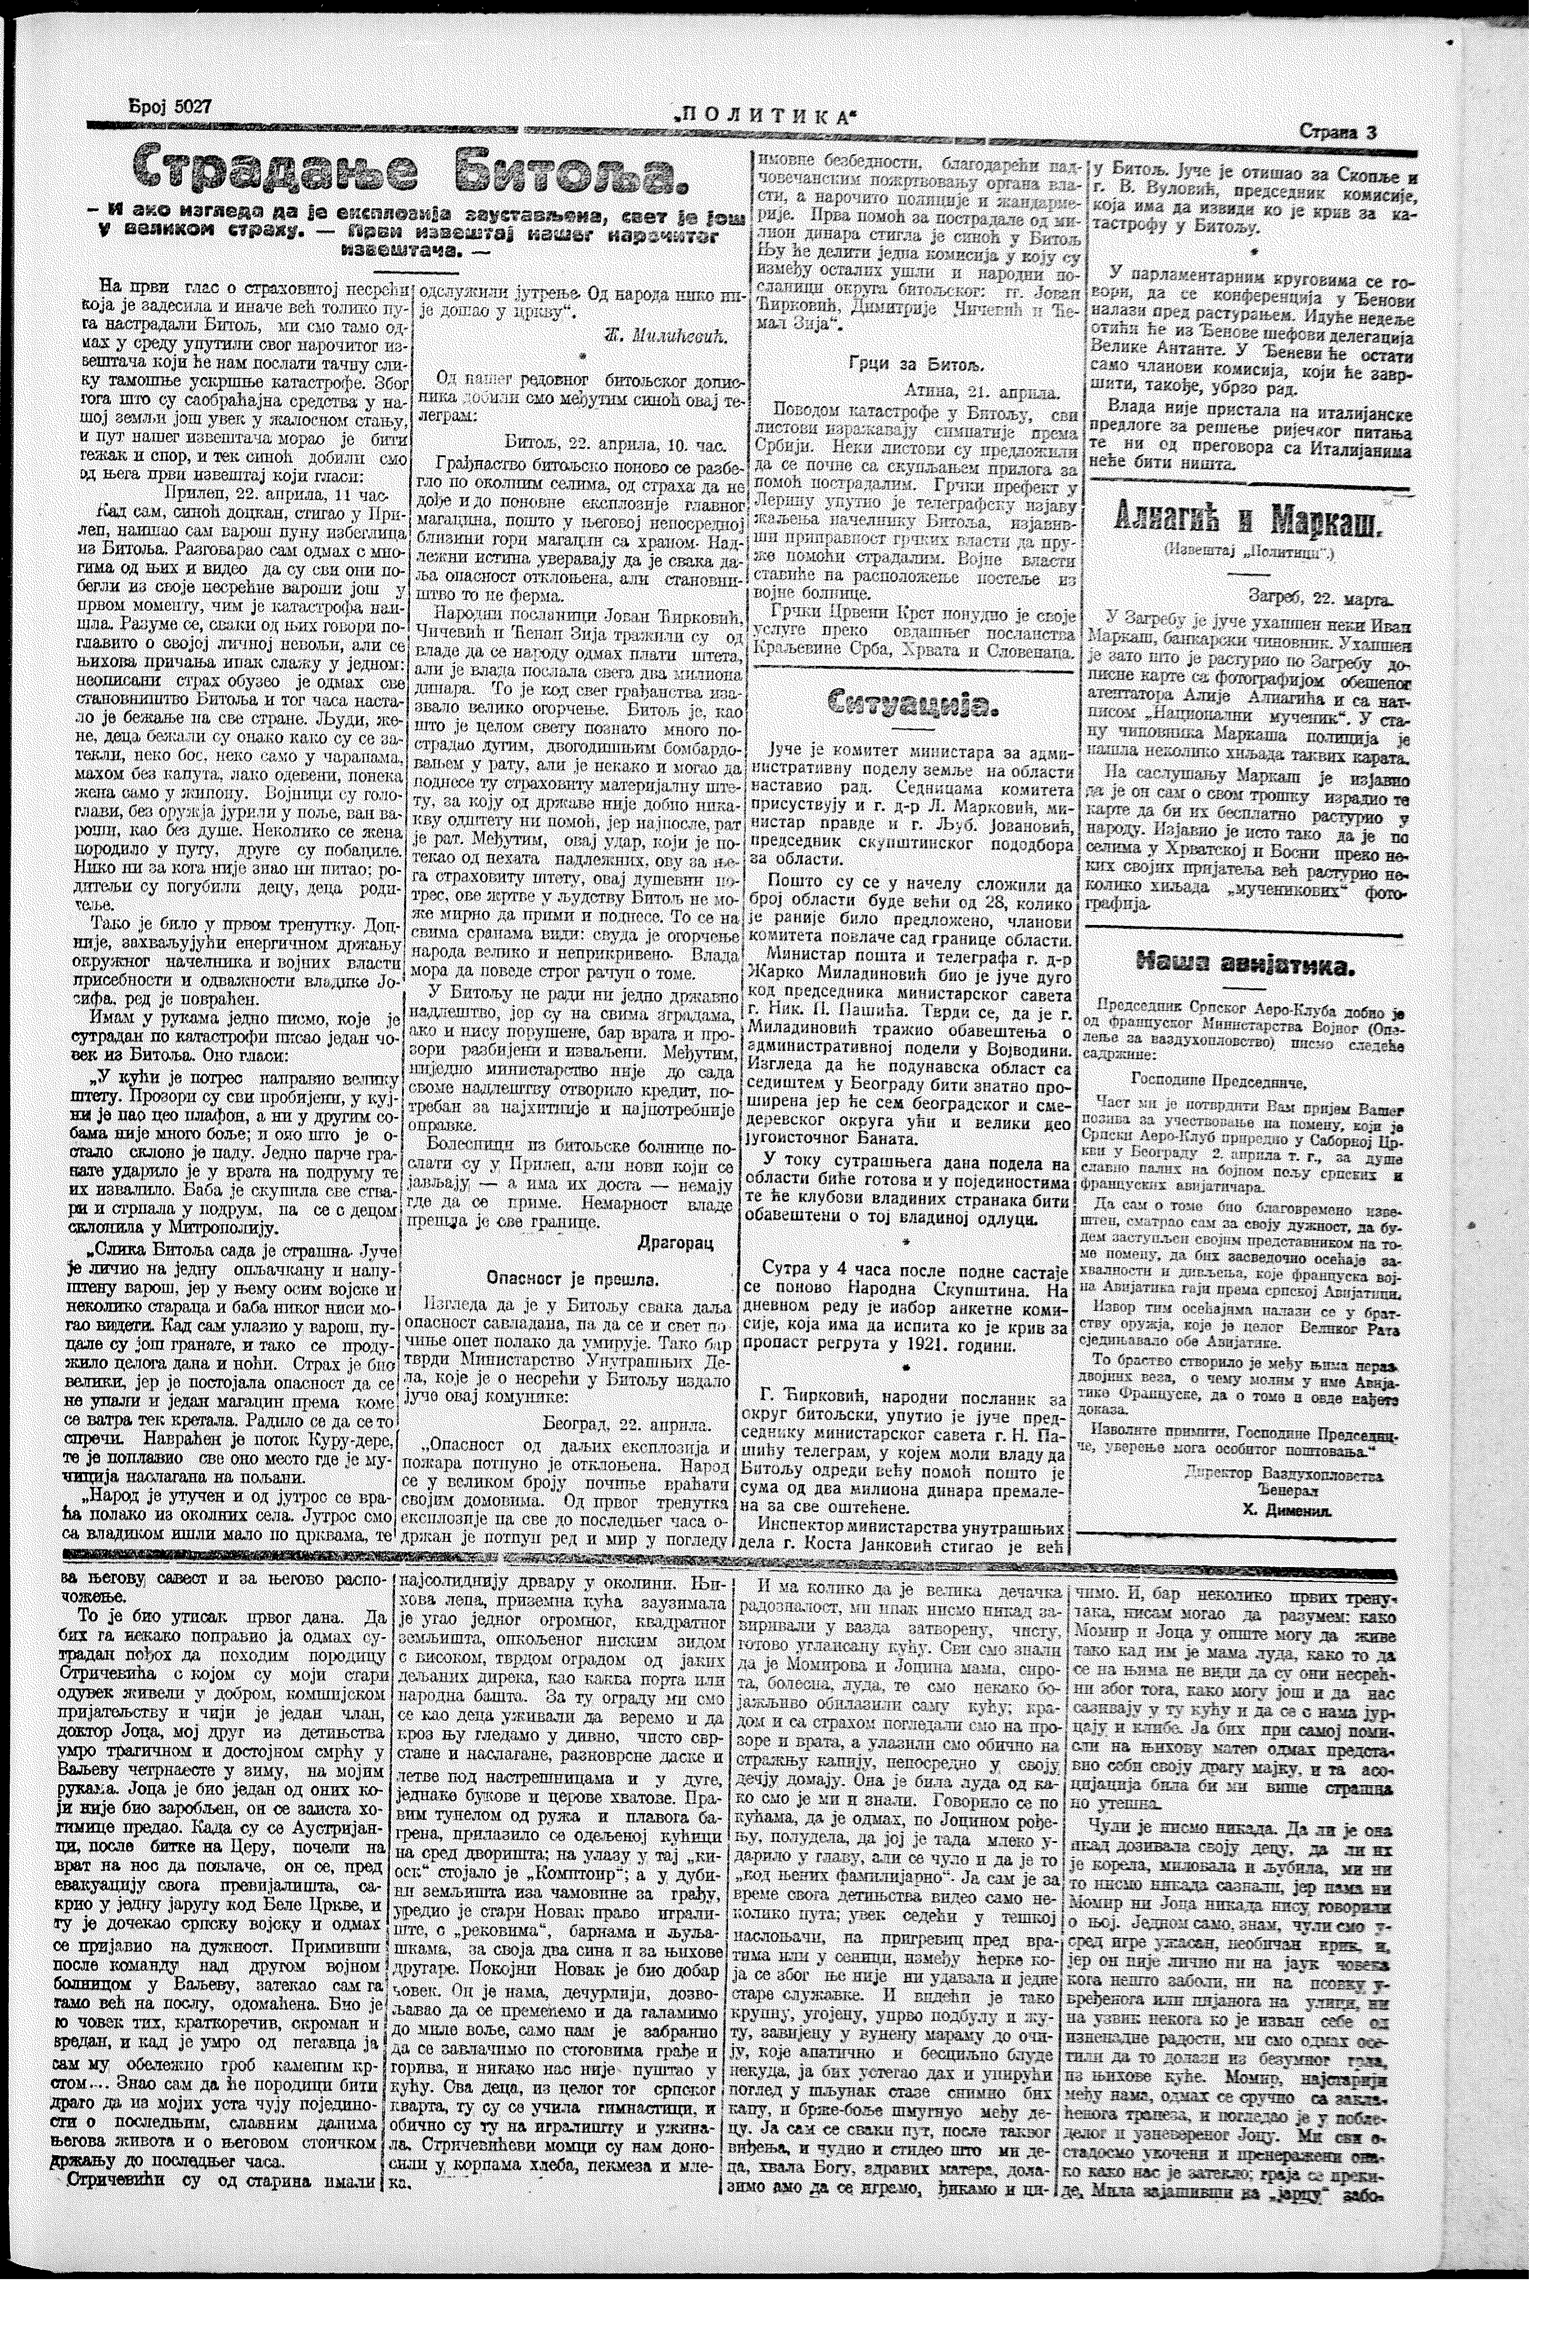 Aliagić i Markaš, Politika, 23.04.1922